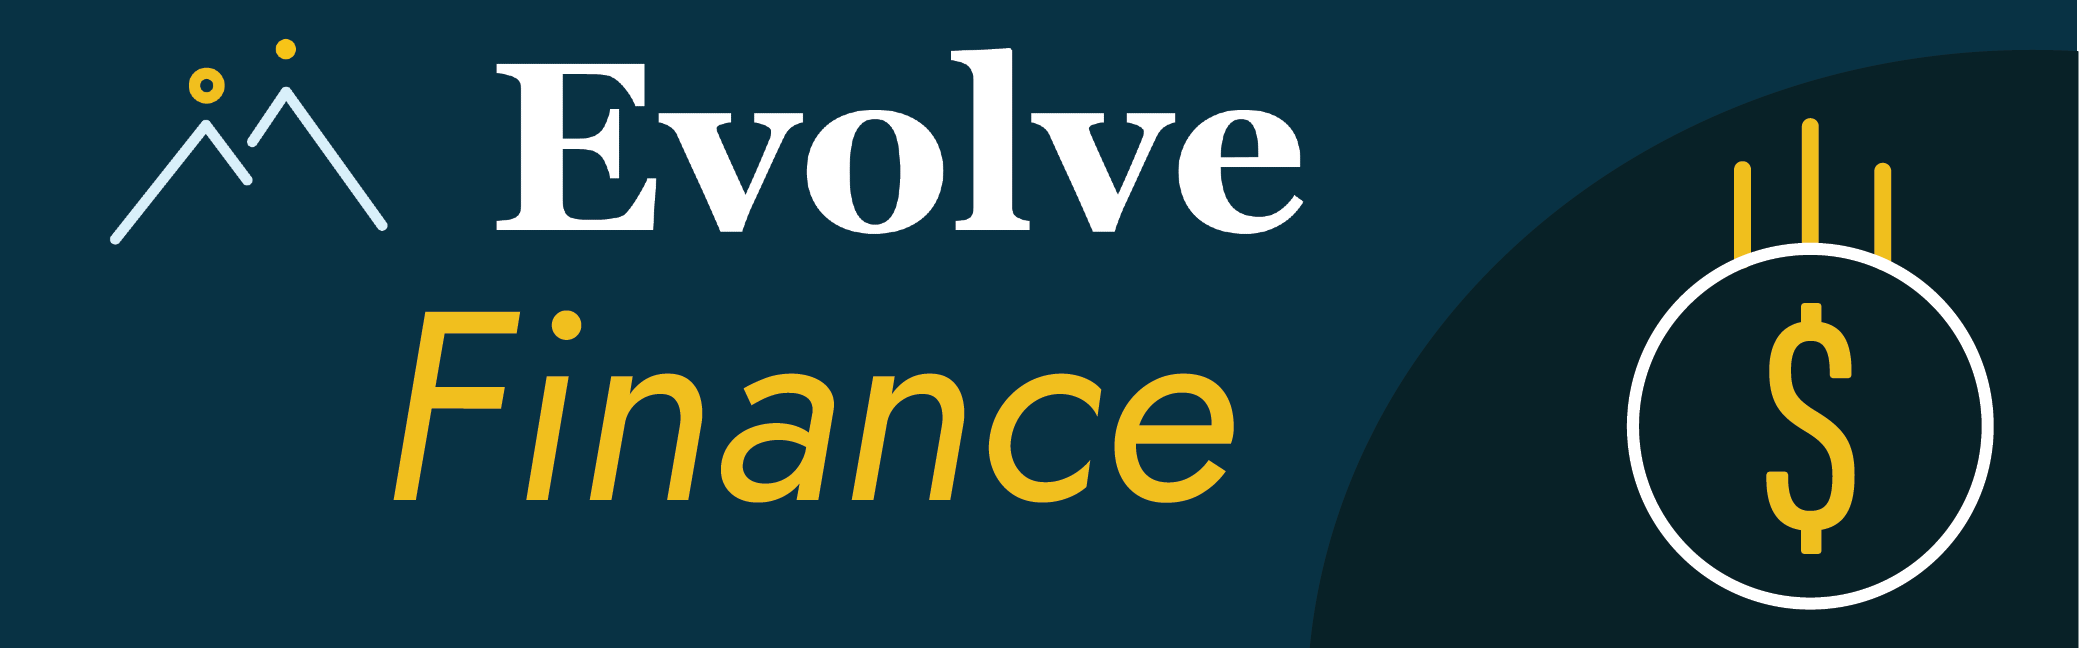 Evolve Finance